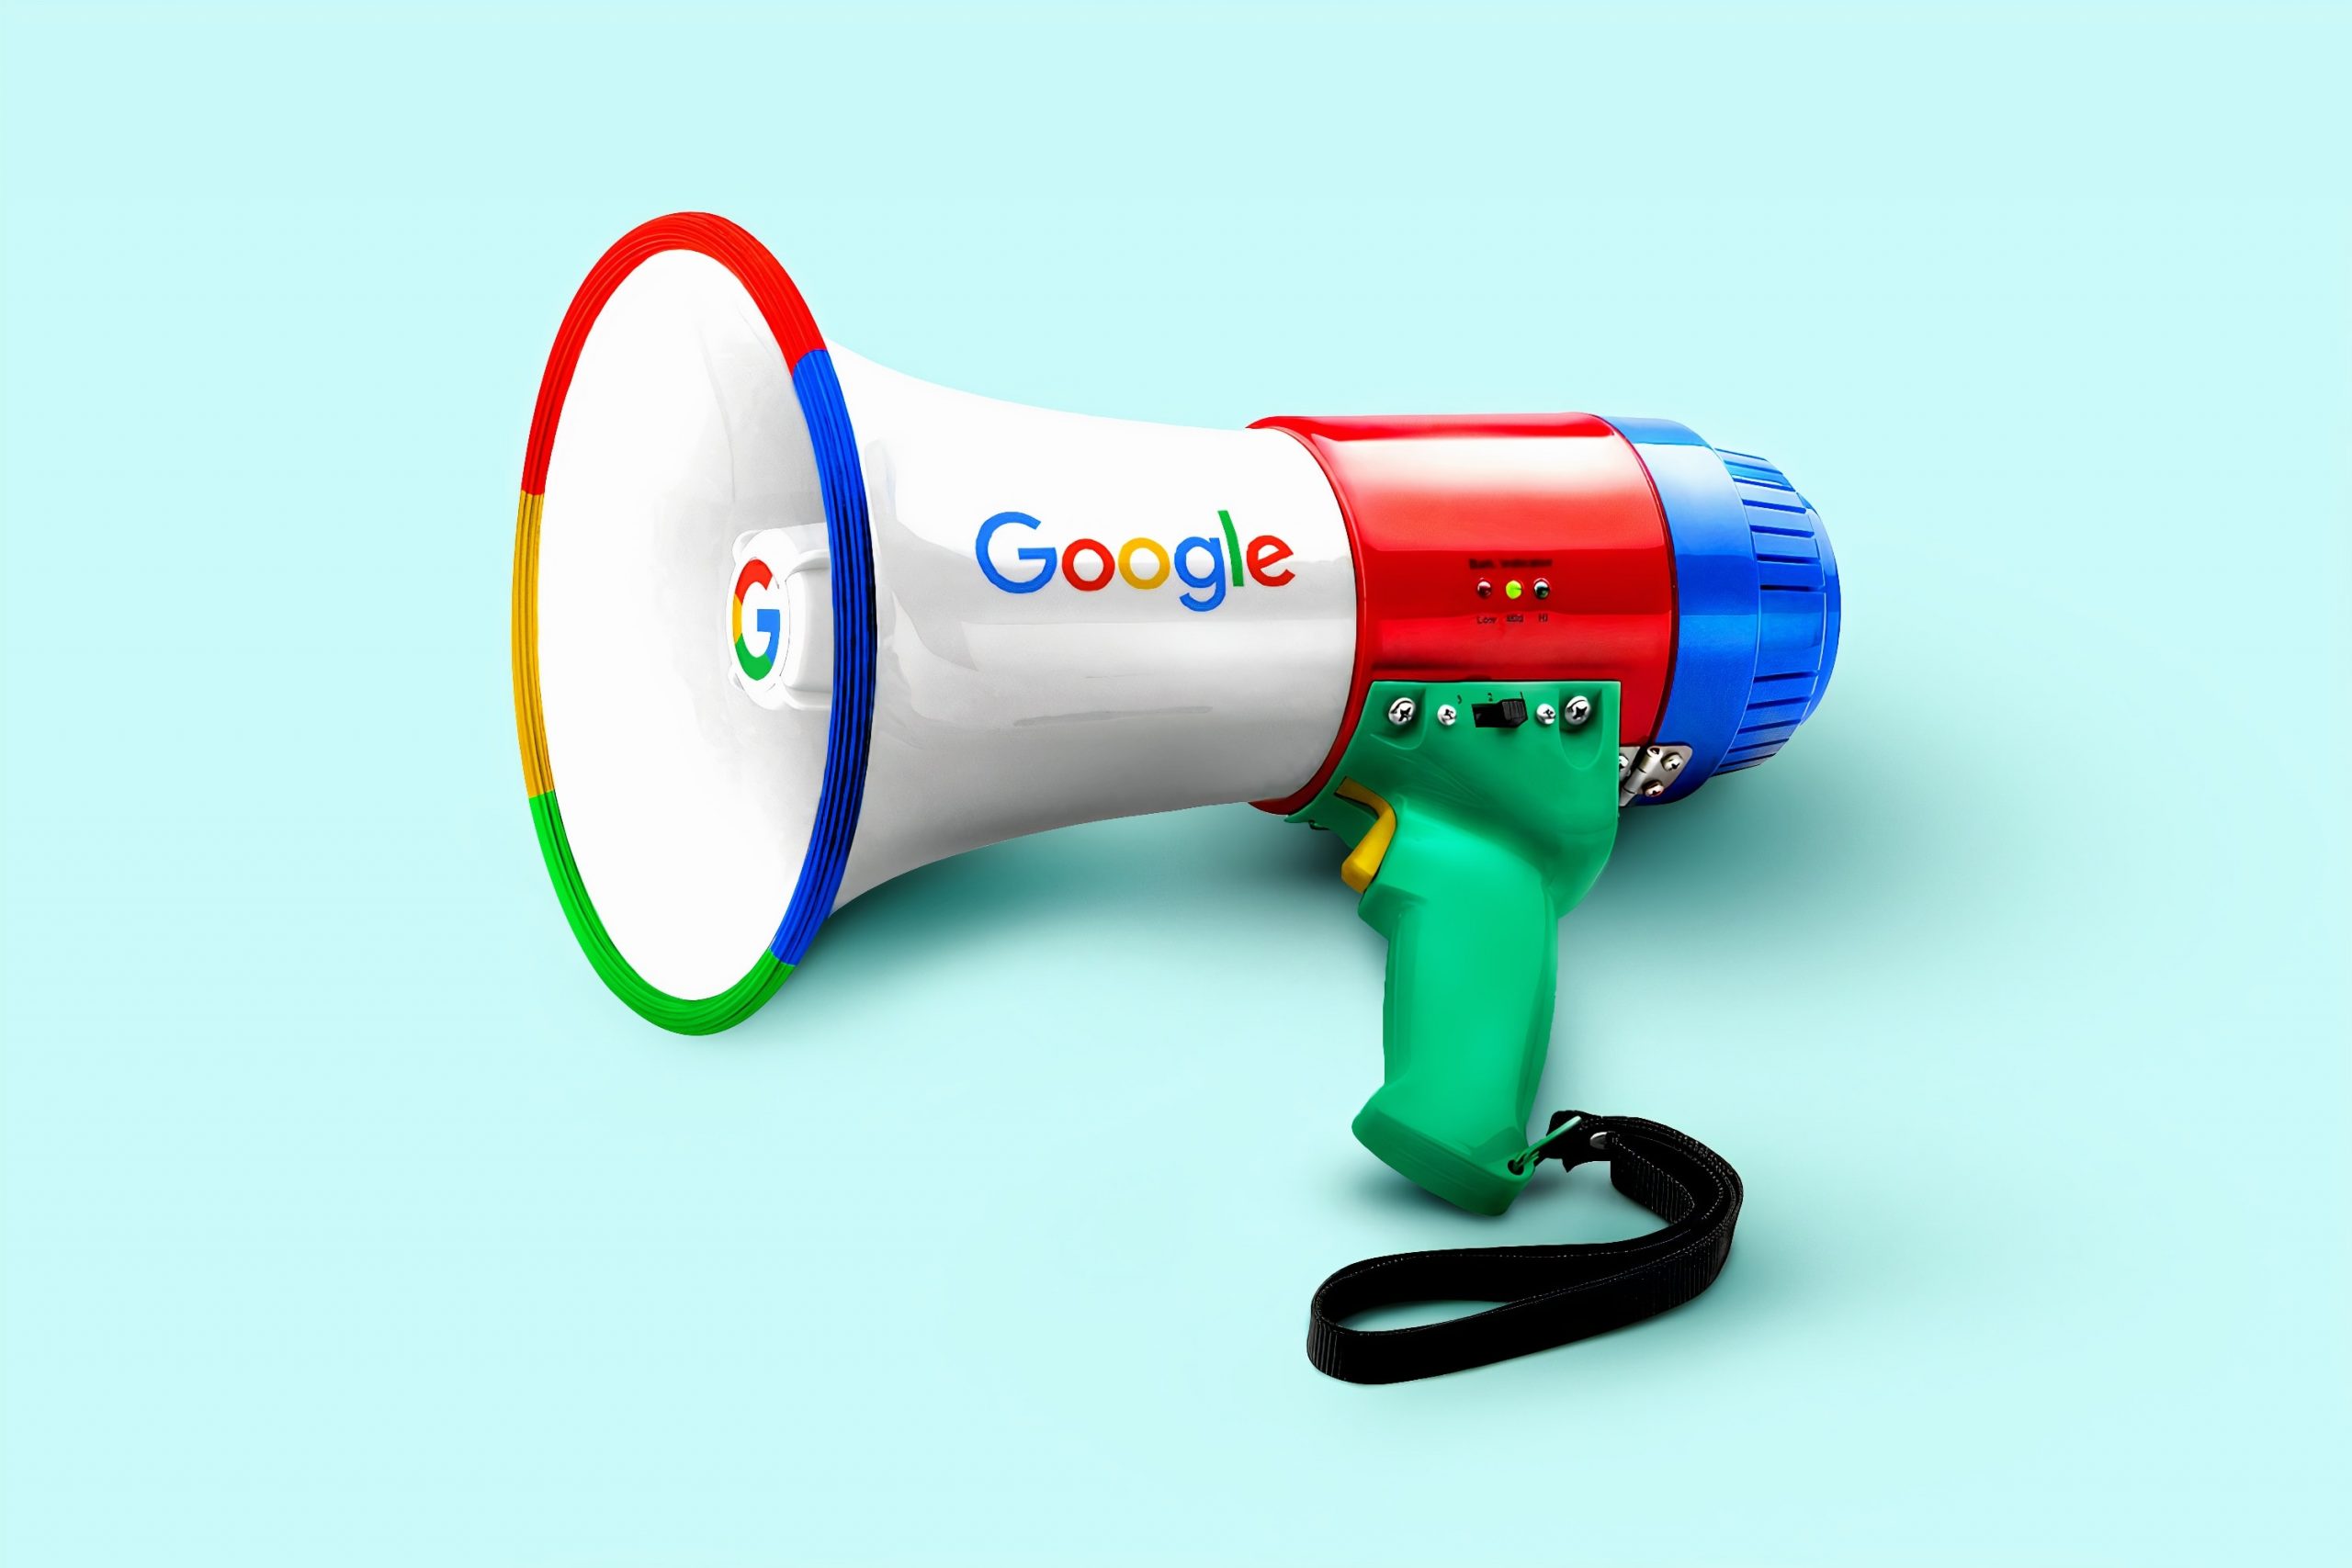 Google-branded megaphone